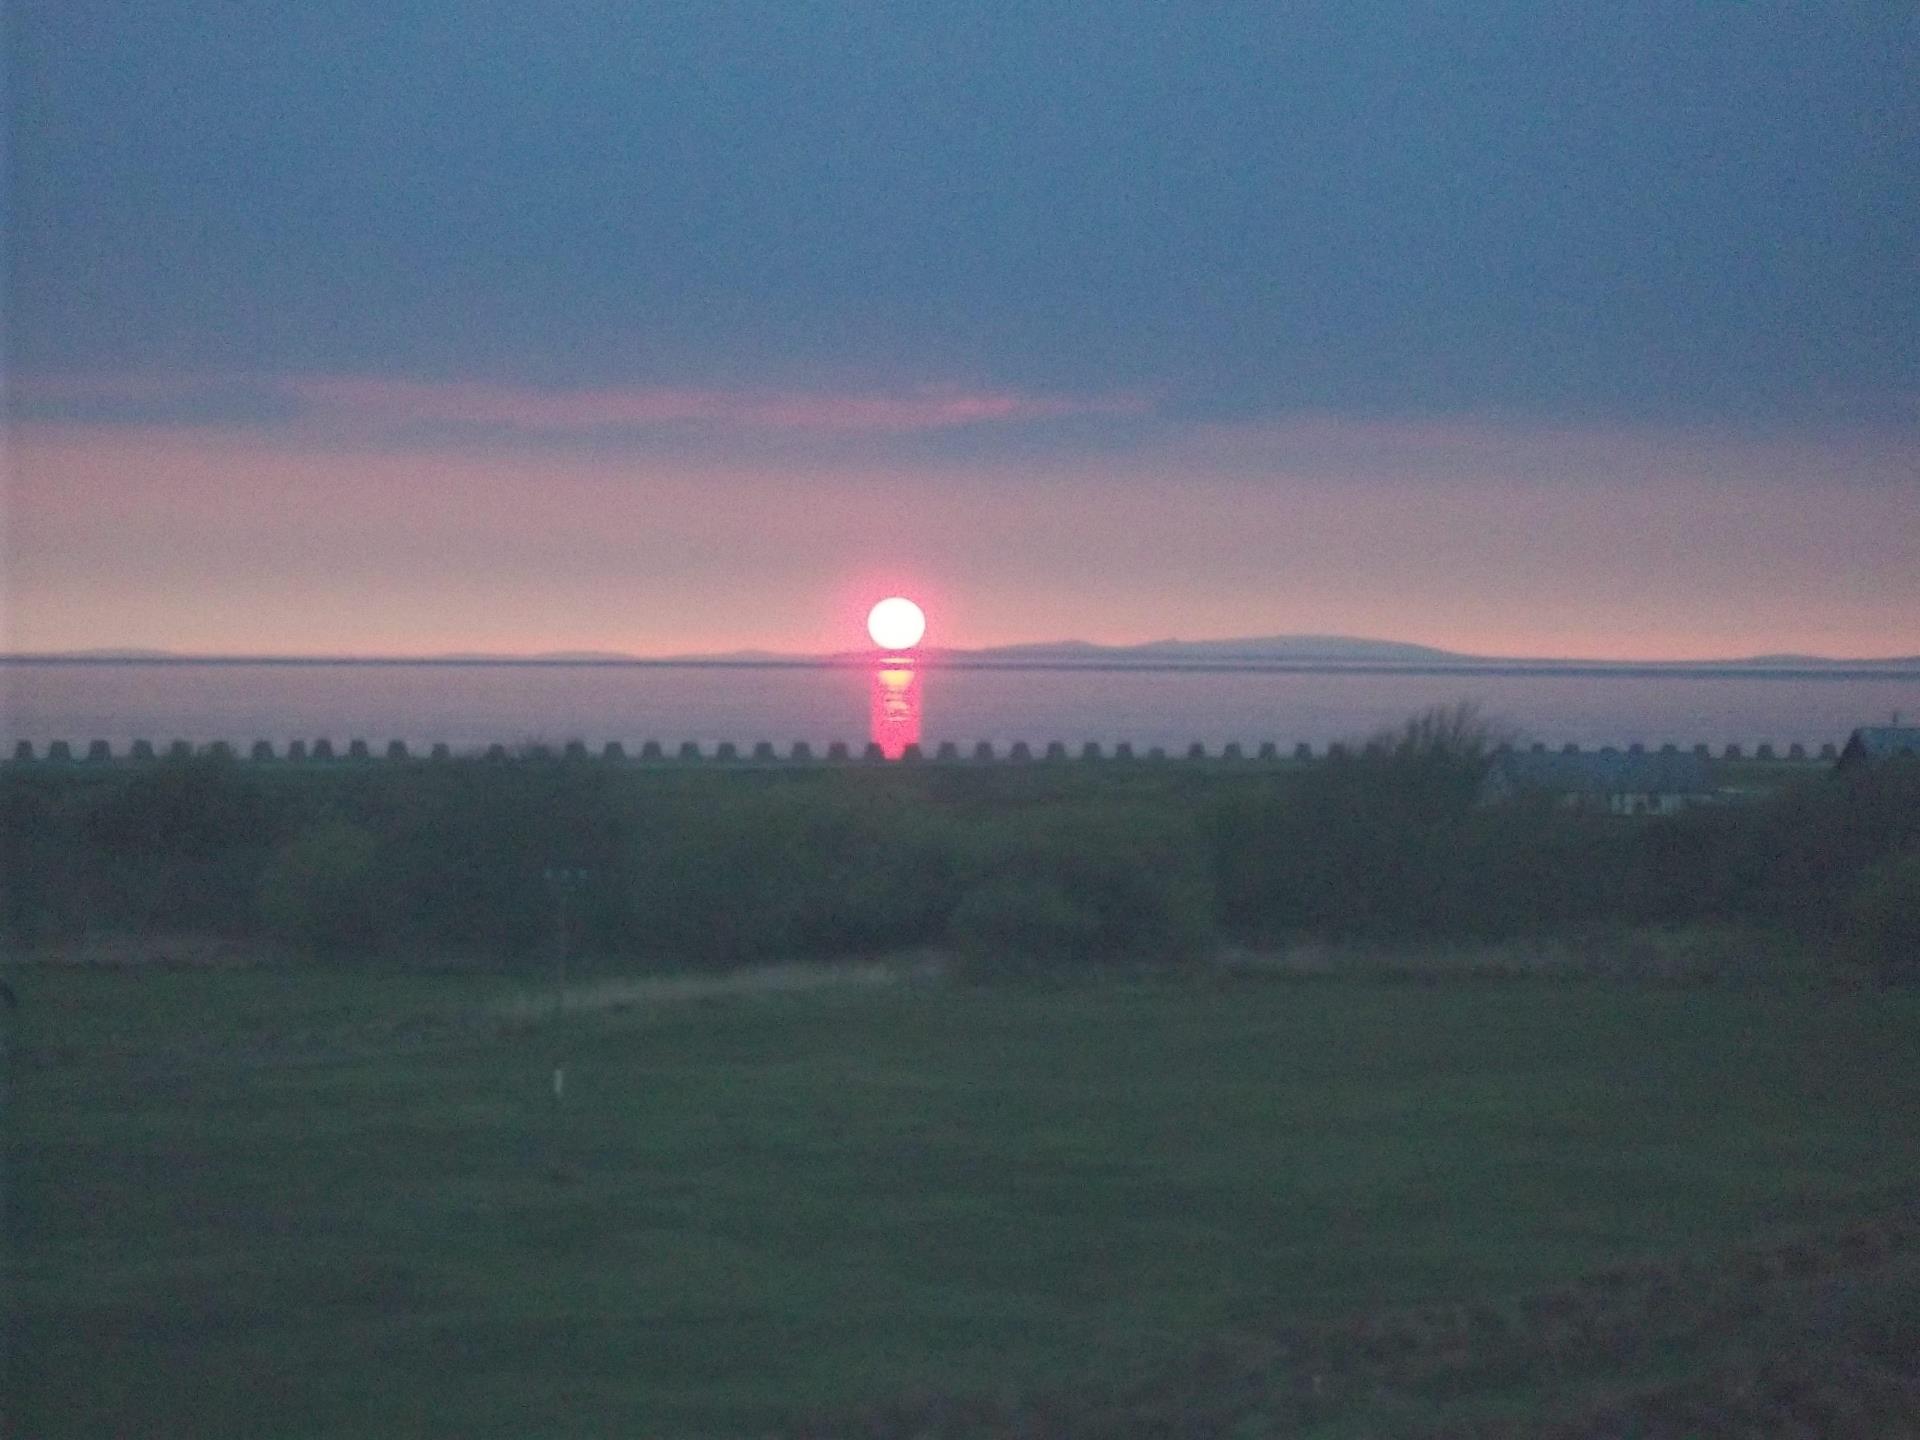 Sunset over the Llyn Peninsular